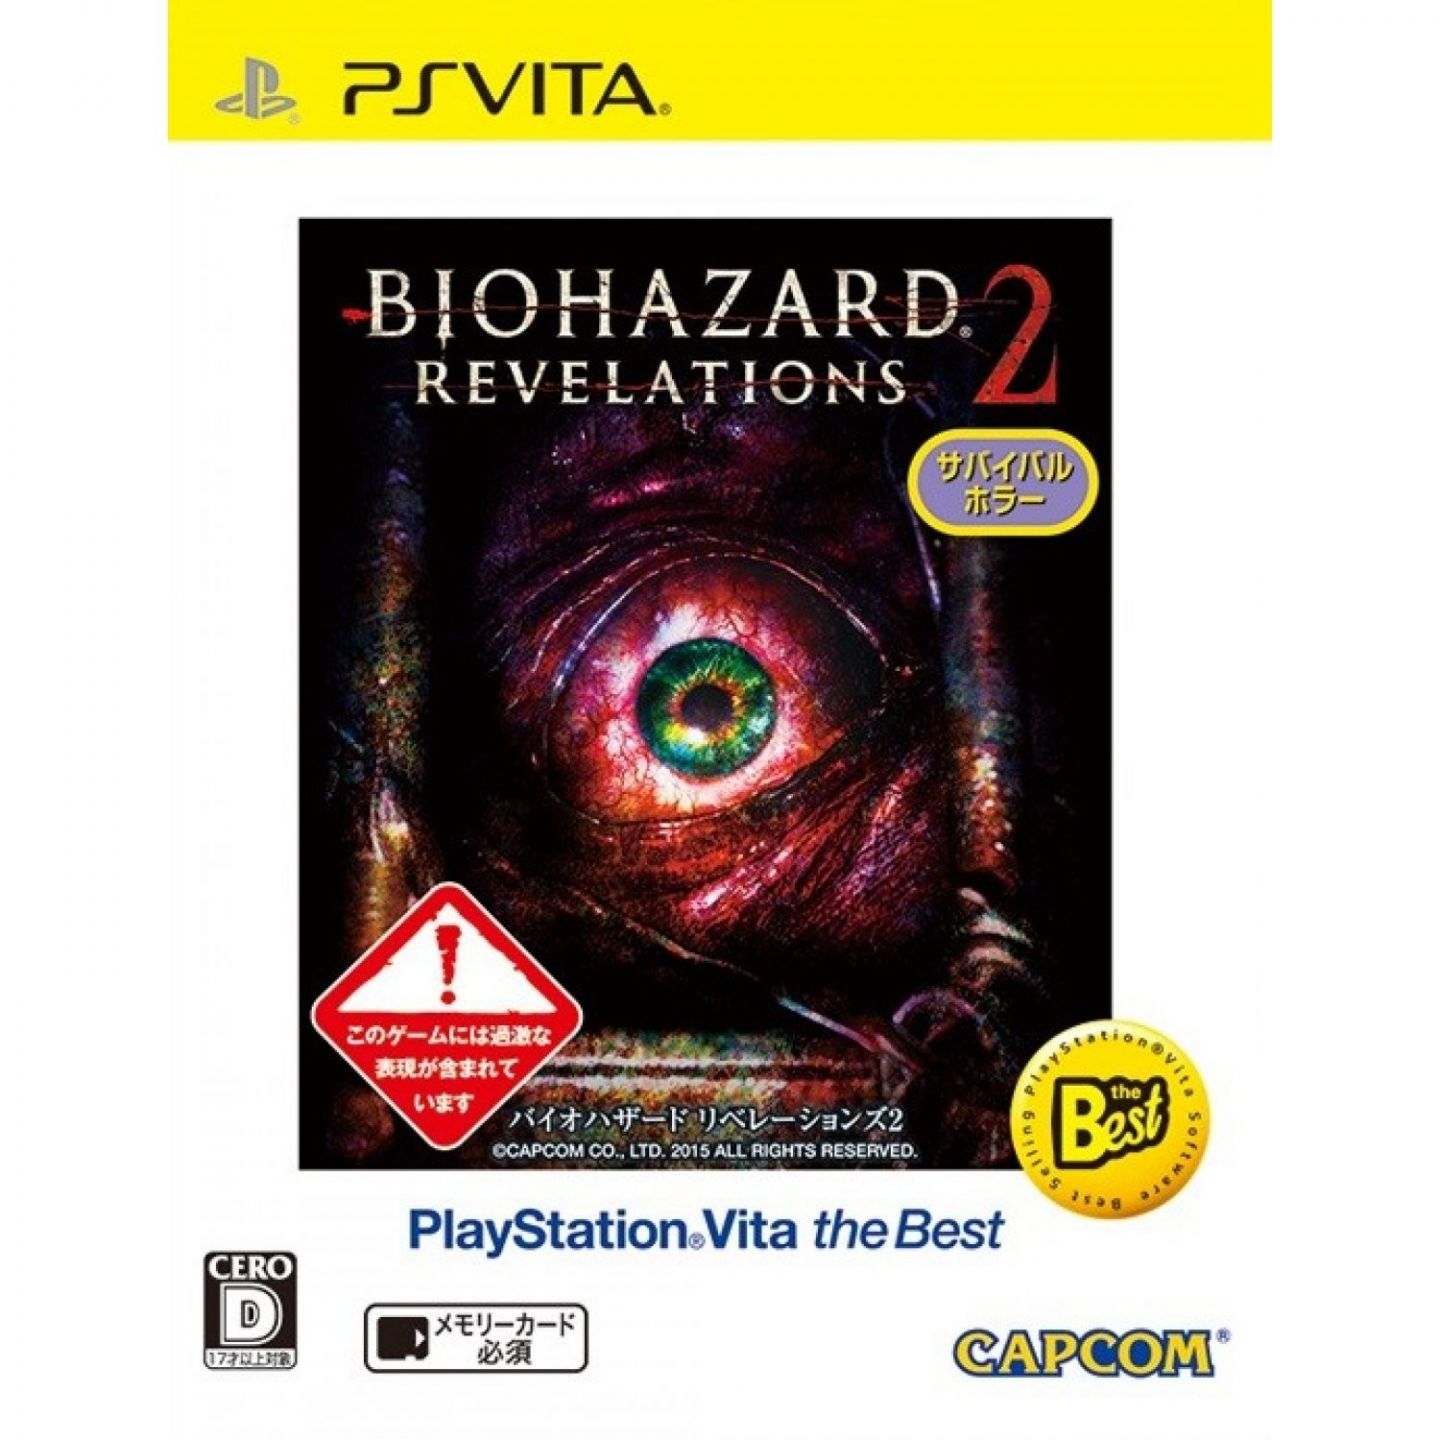 Capcom Biohazard Revelations 2 Playstation Vita The Best Ps Vita